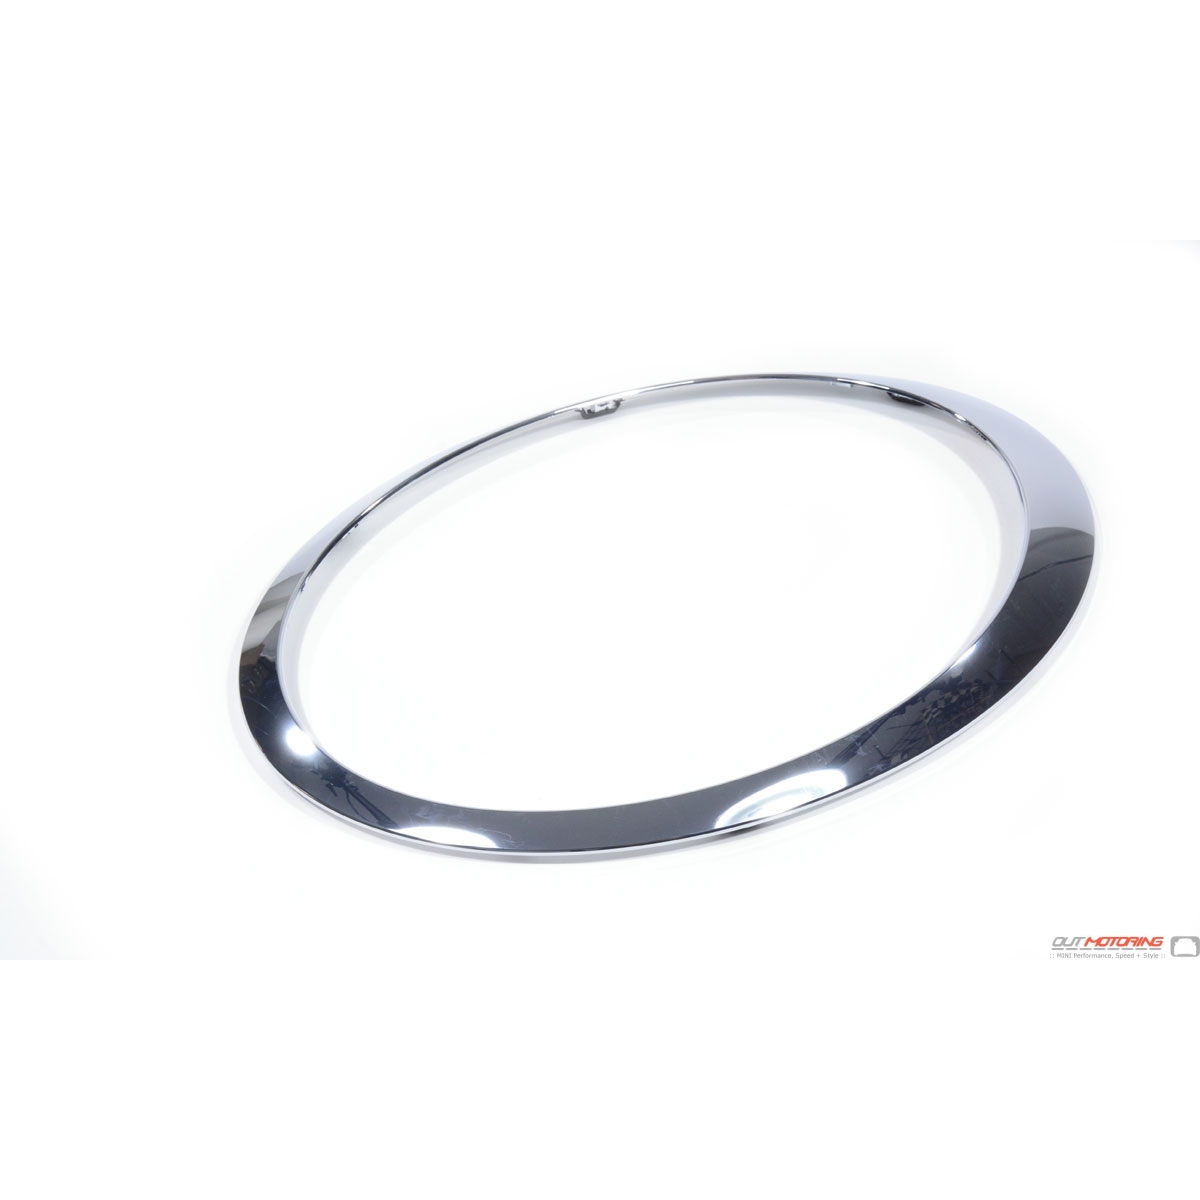 51137149906 Mini Cooper Replacement Parts Headlight Trim: Chrome: Right  rings - MINI Cooper Accessories + MINI Cooper Parts